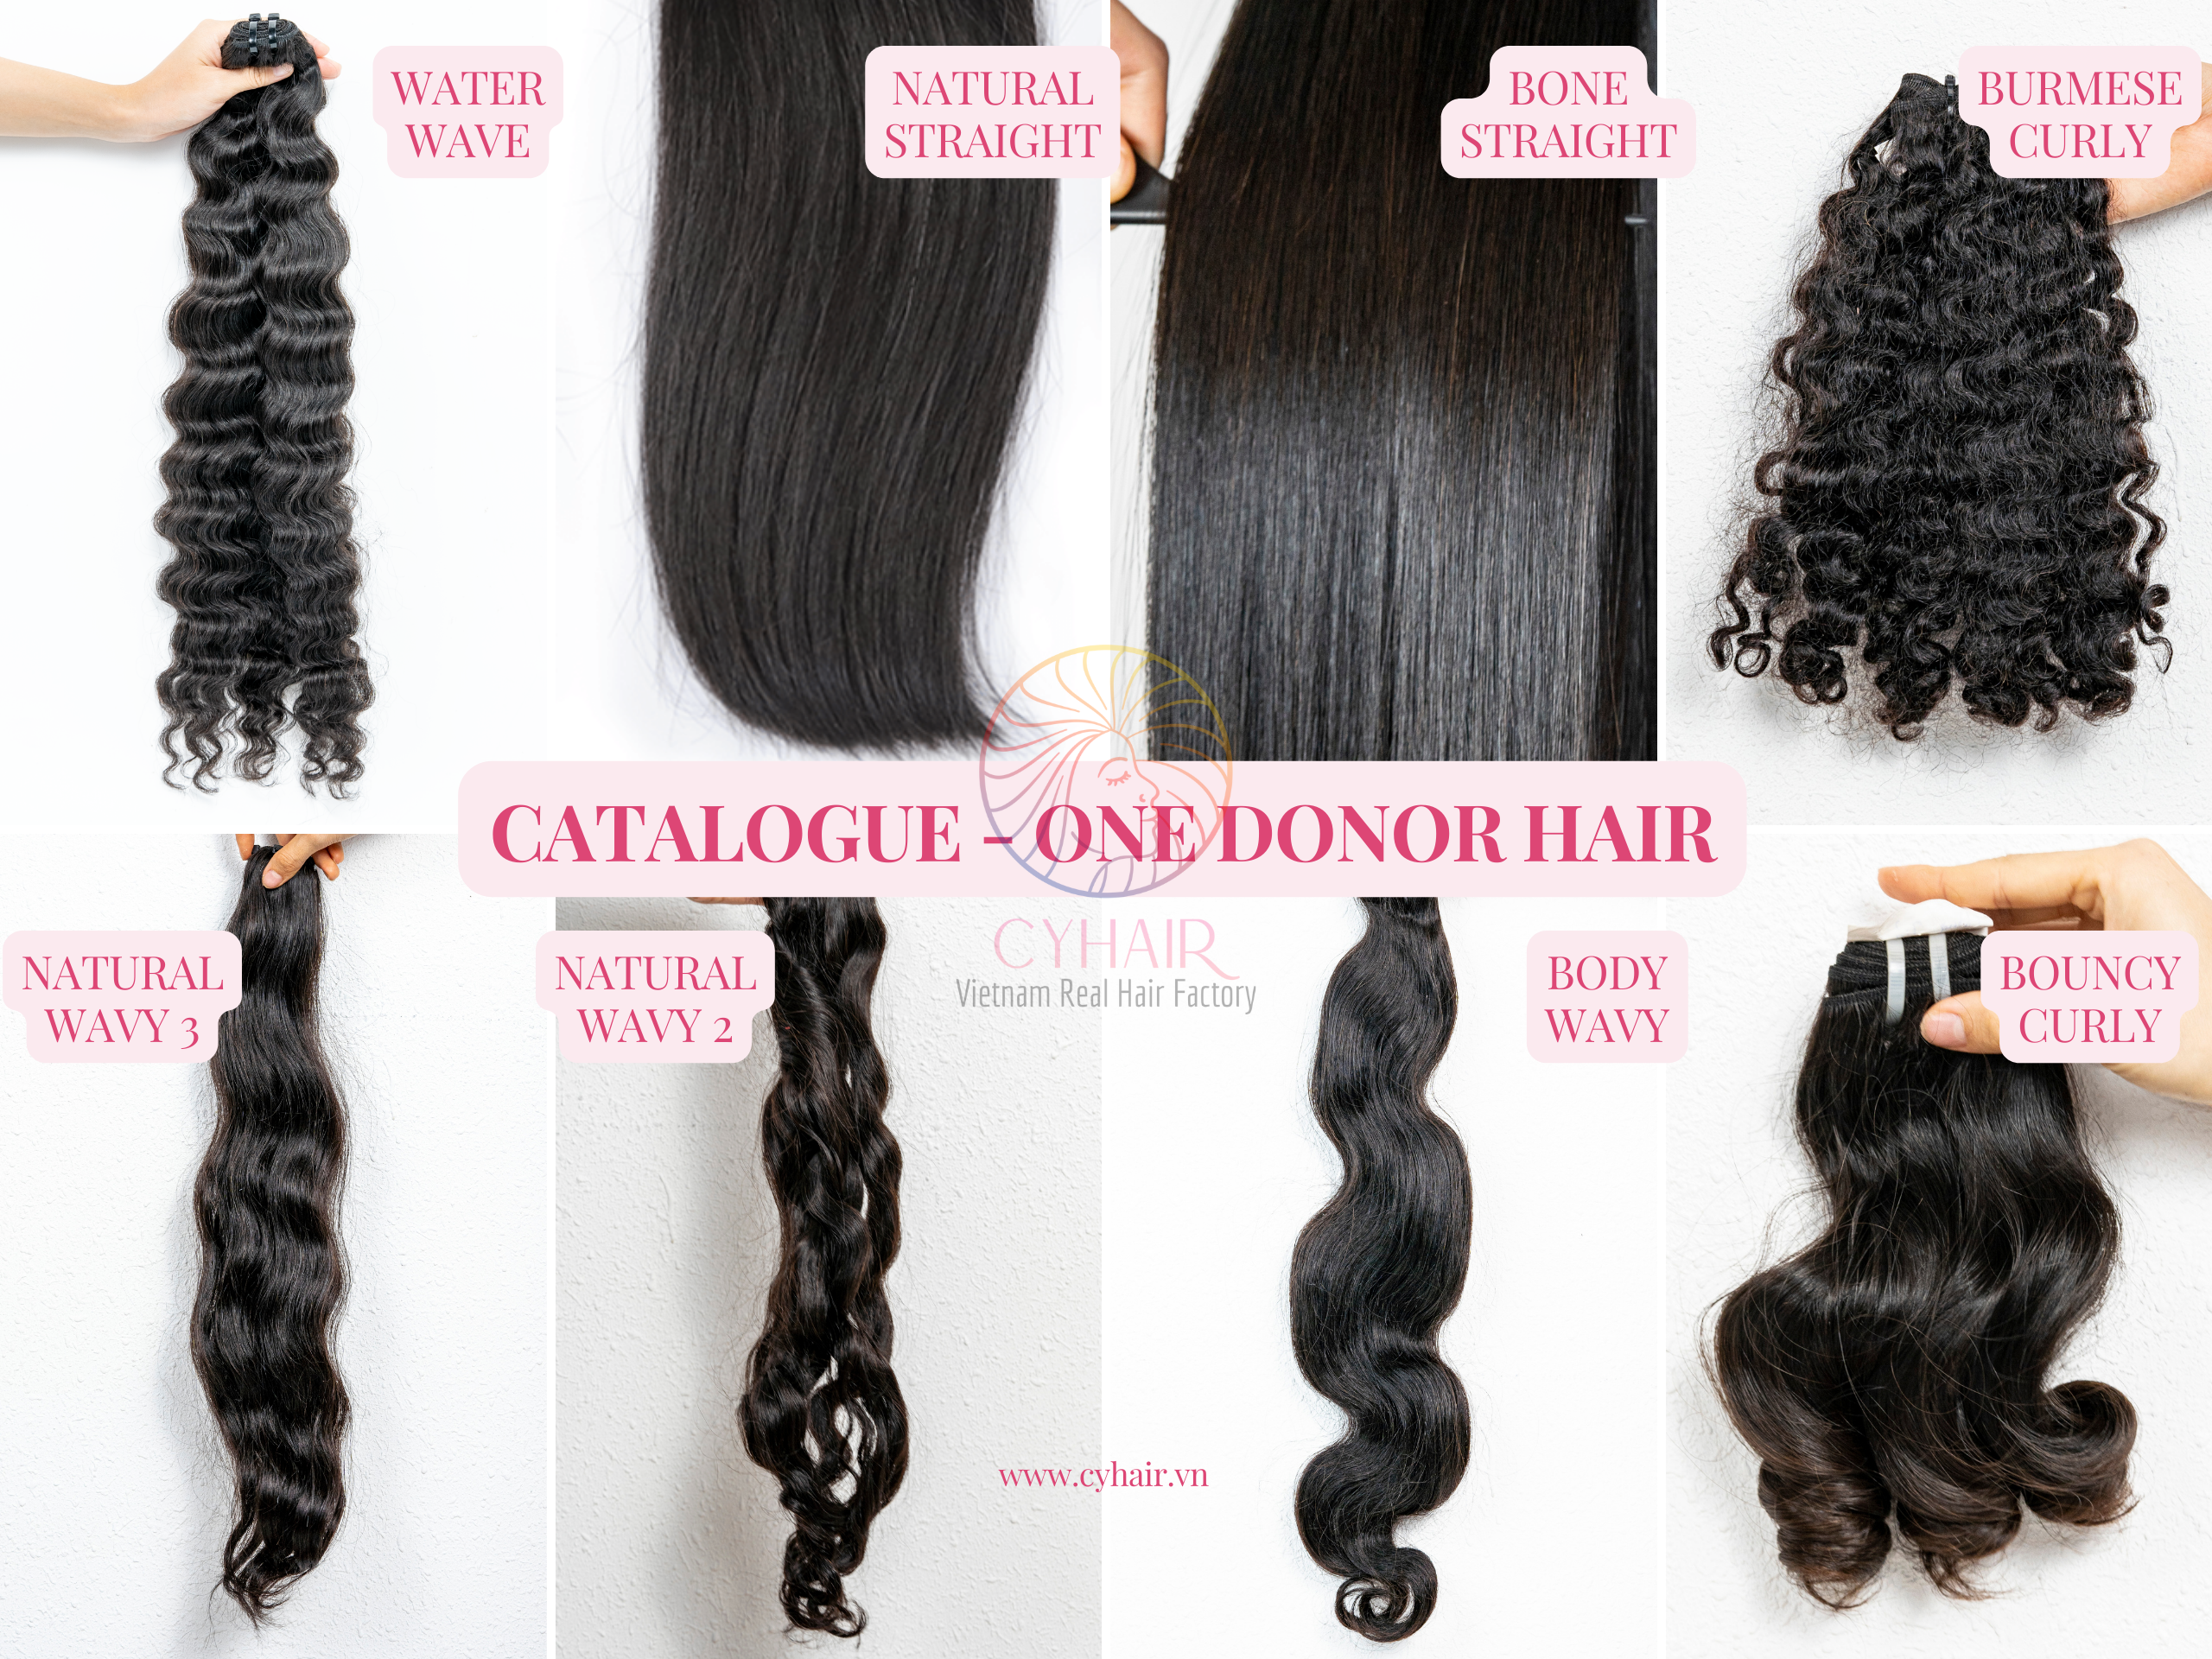 One Donor Hair Catalog